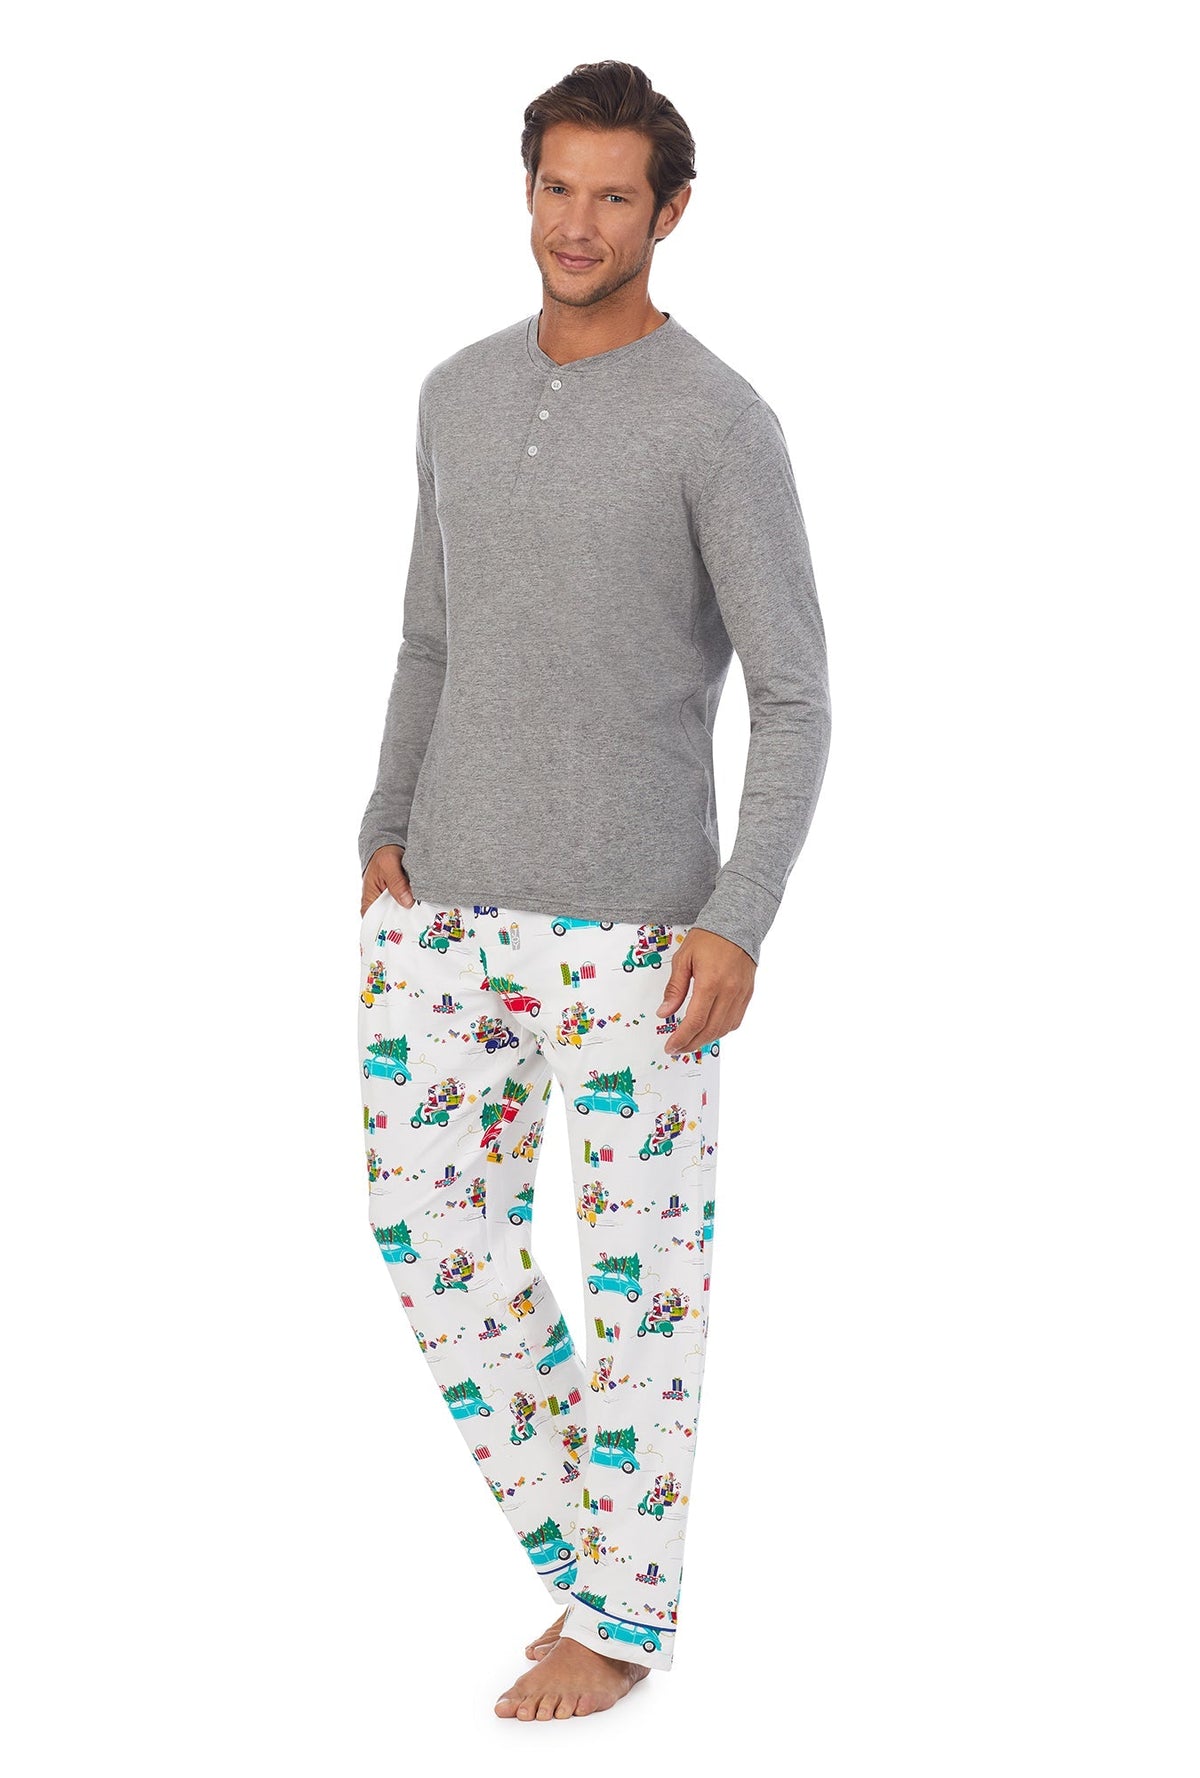 Holiday Rush Men's Henley Stretch Jersey PJ Set - Bedhead Pajamas